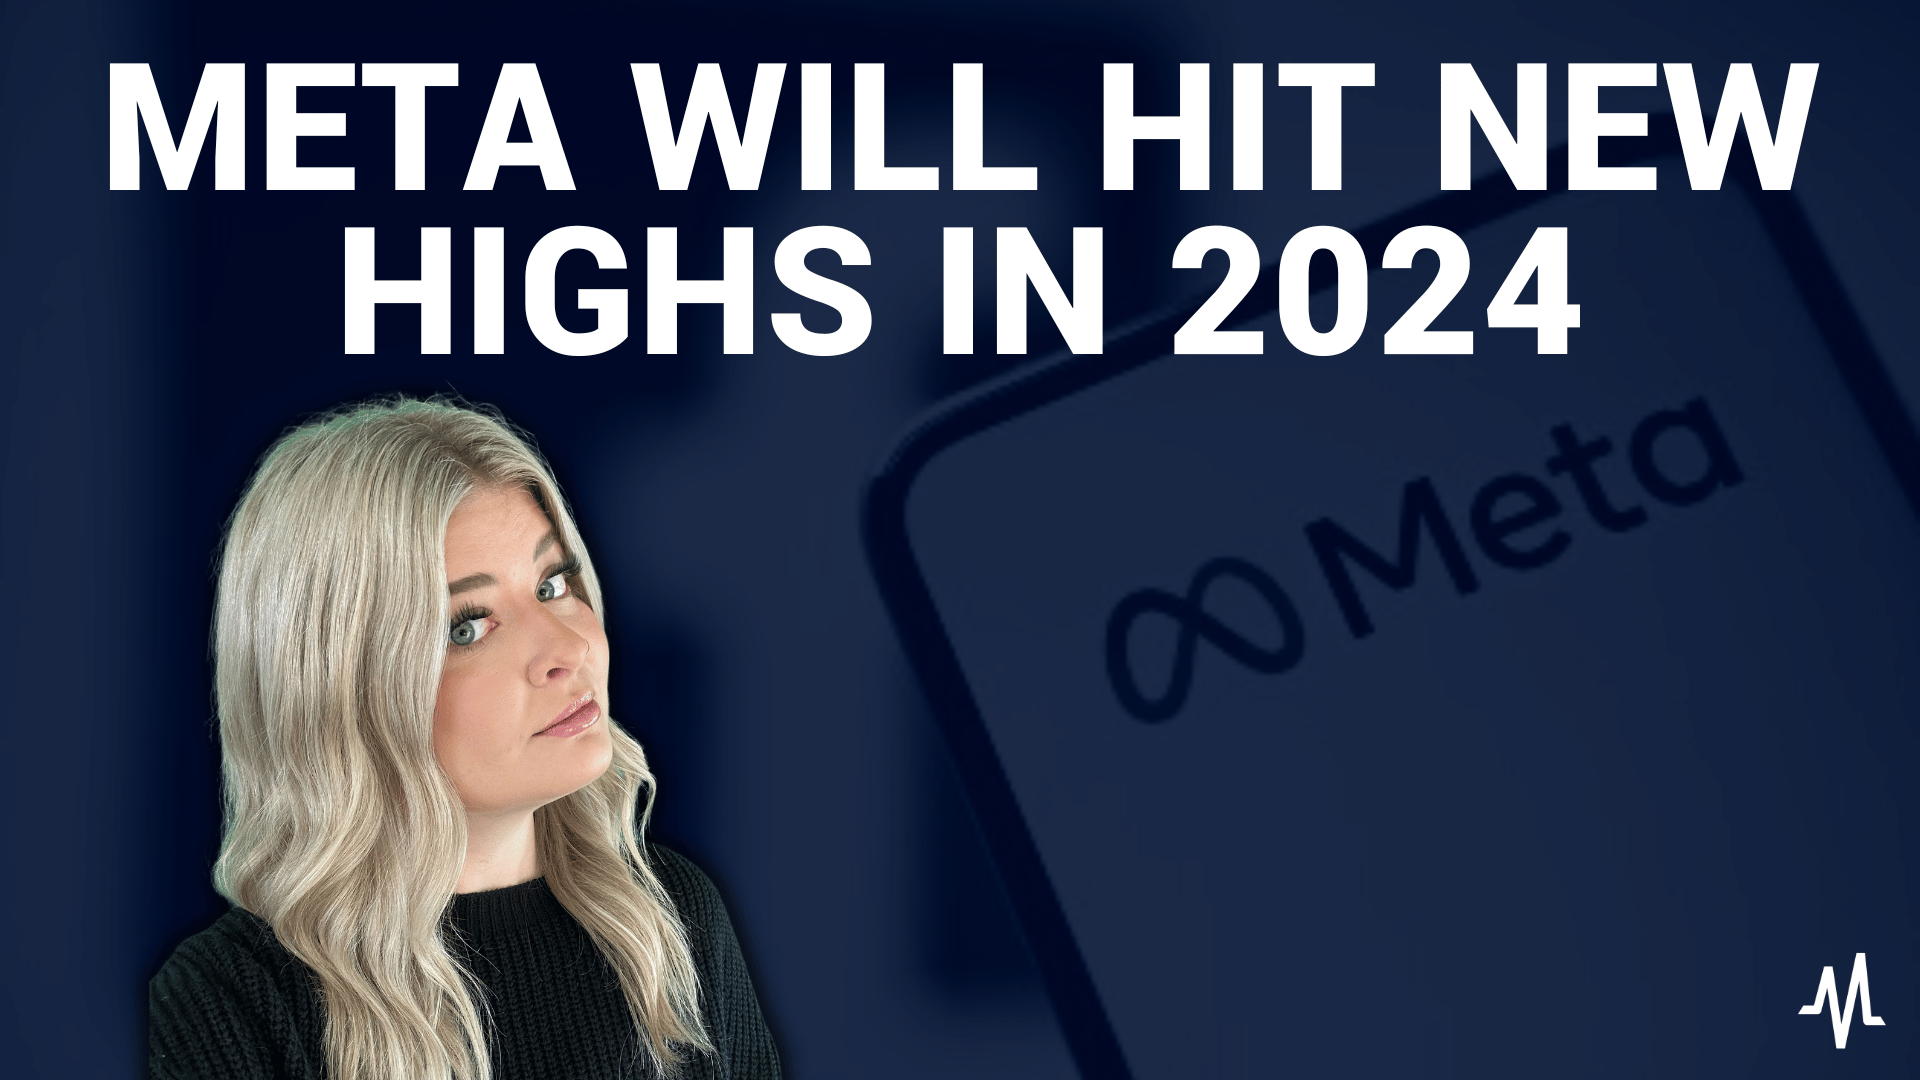 Meta Platforms Stock Will Hit New Highs in 2024